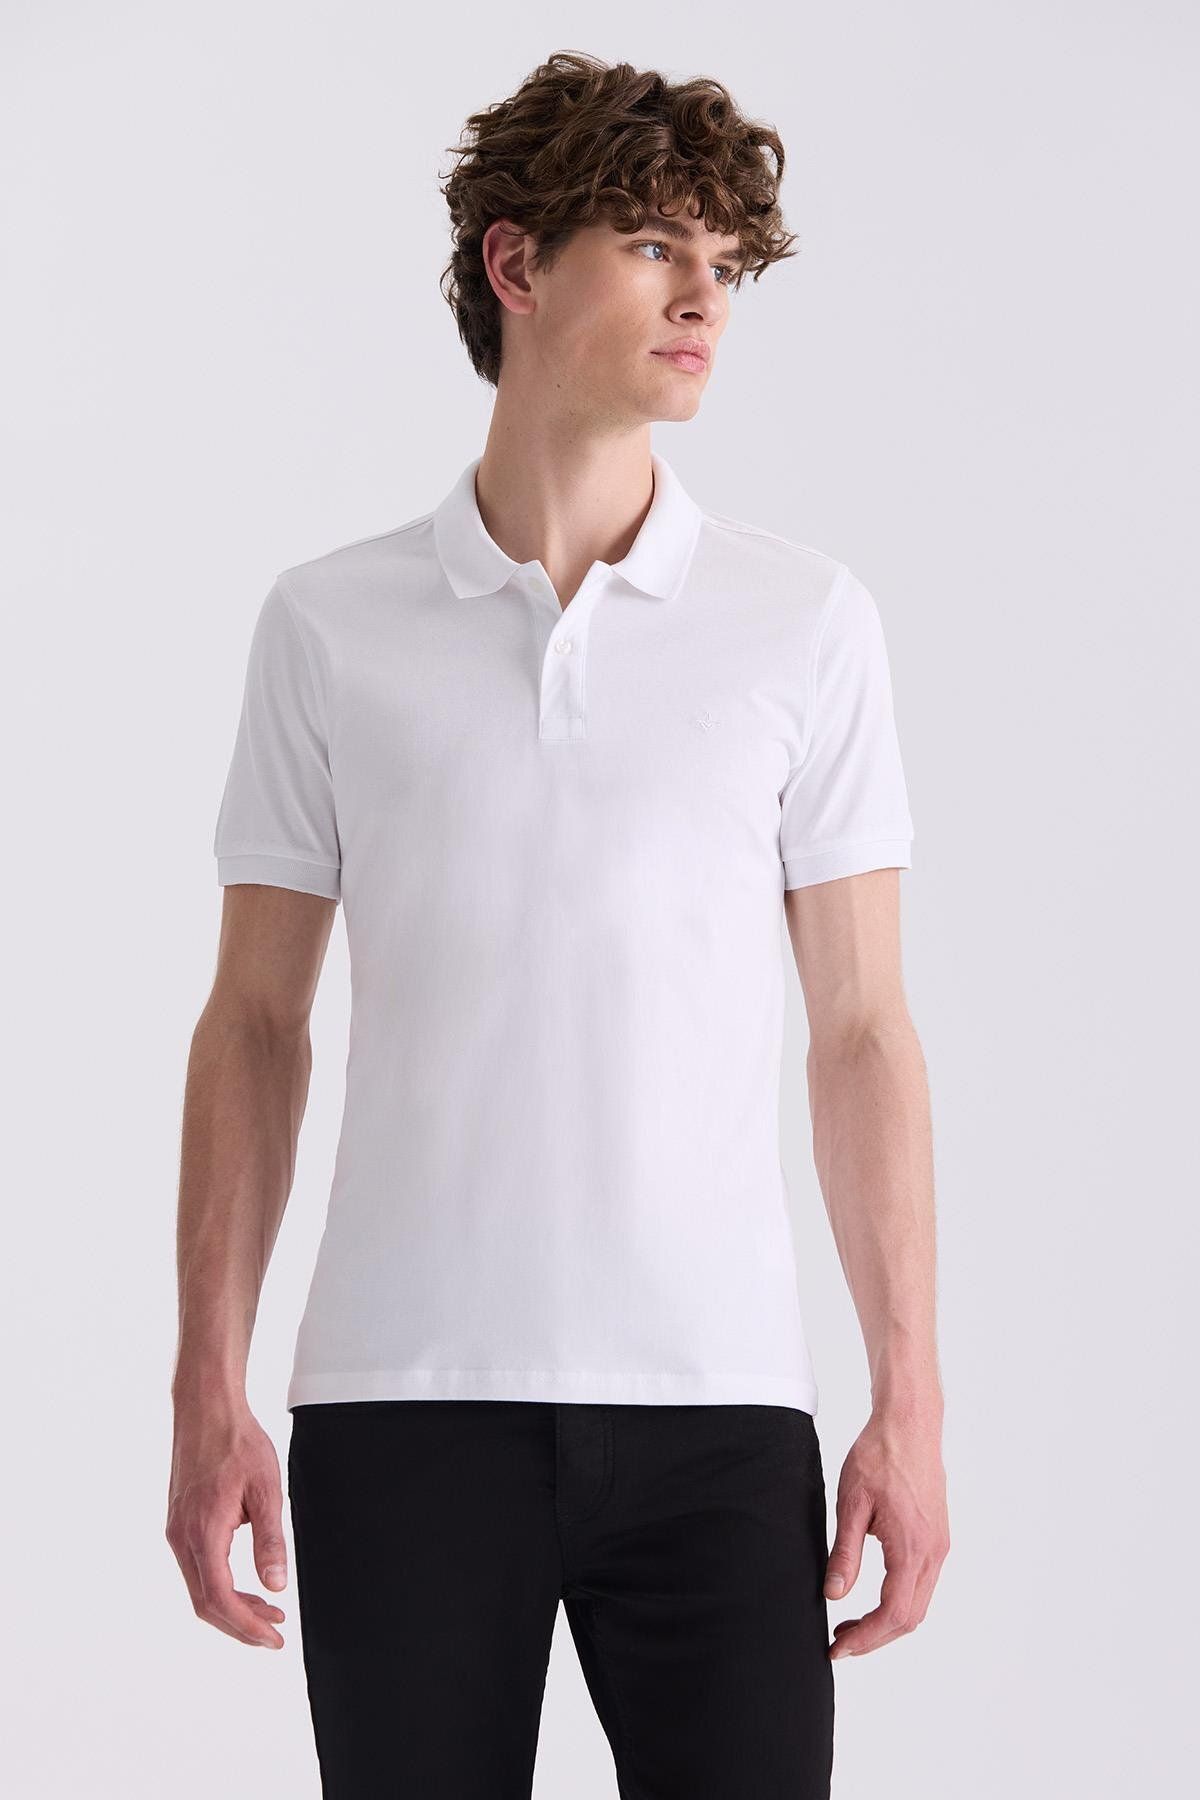 Jakamen Beyaz Slim Fit Polo Yaka T-Shirt